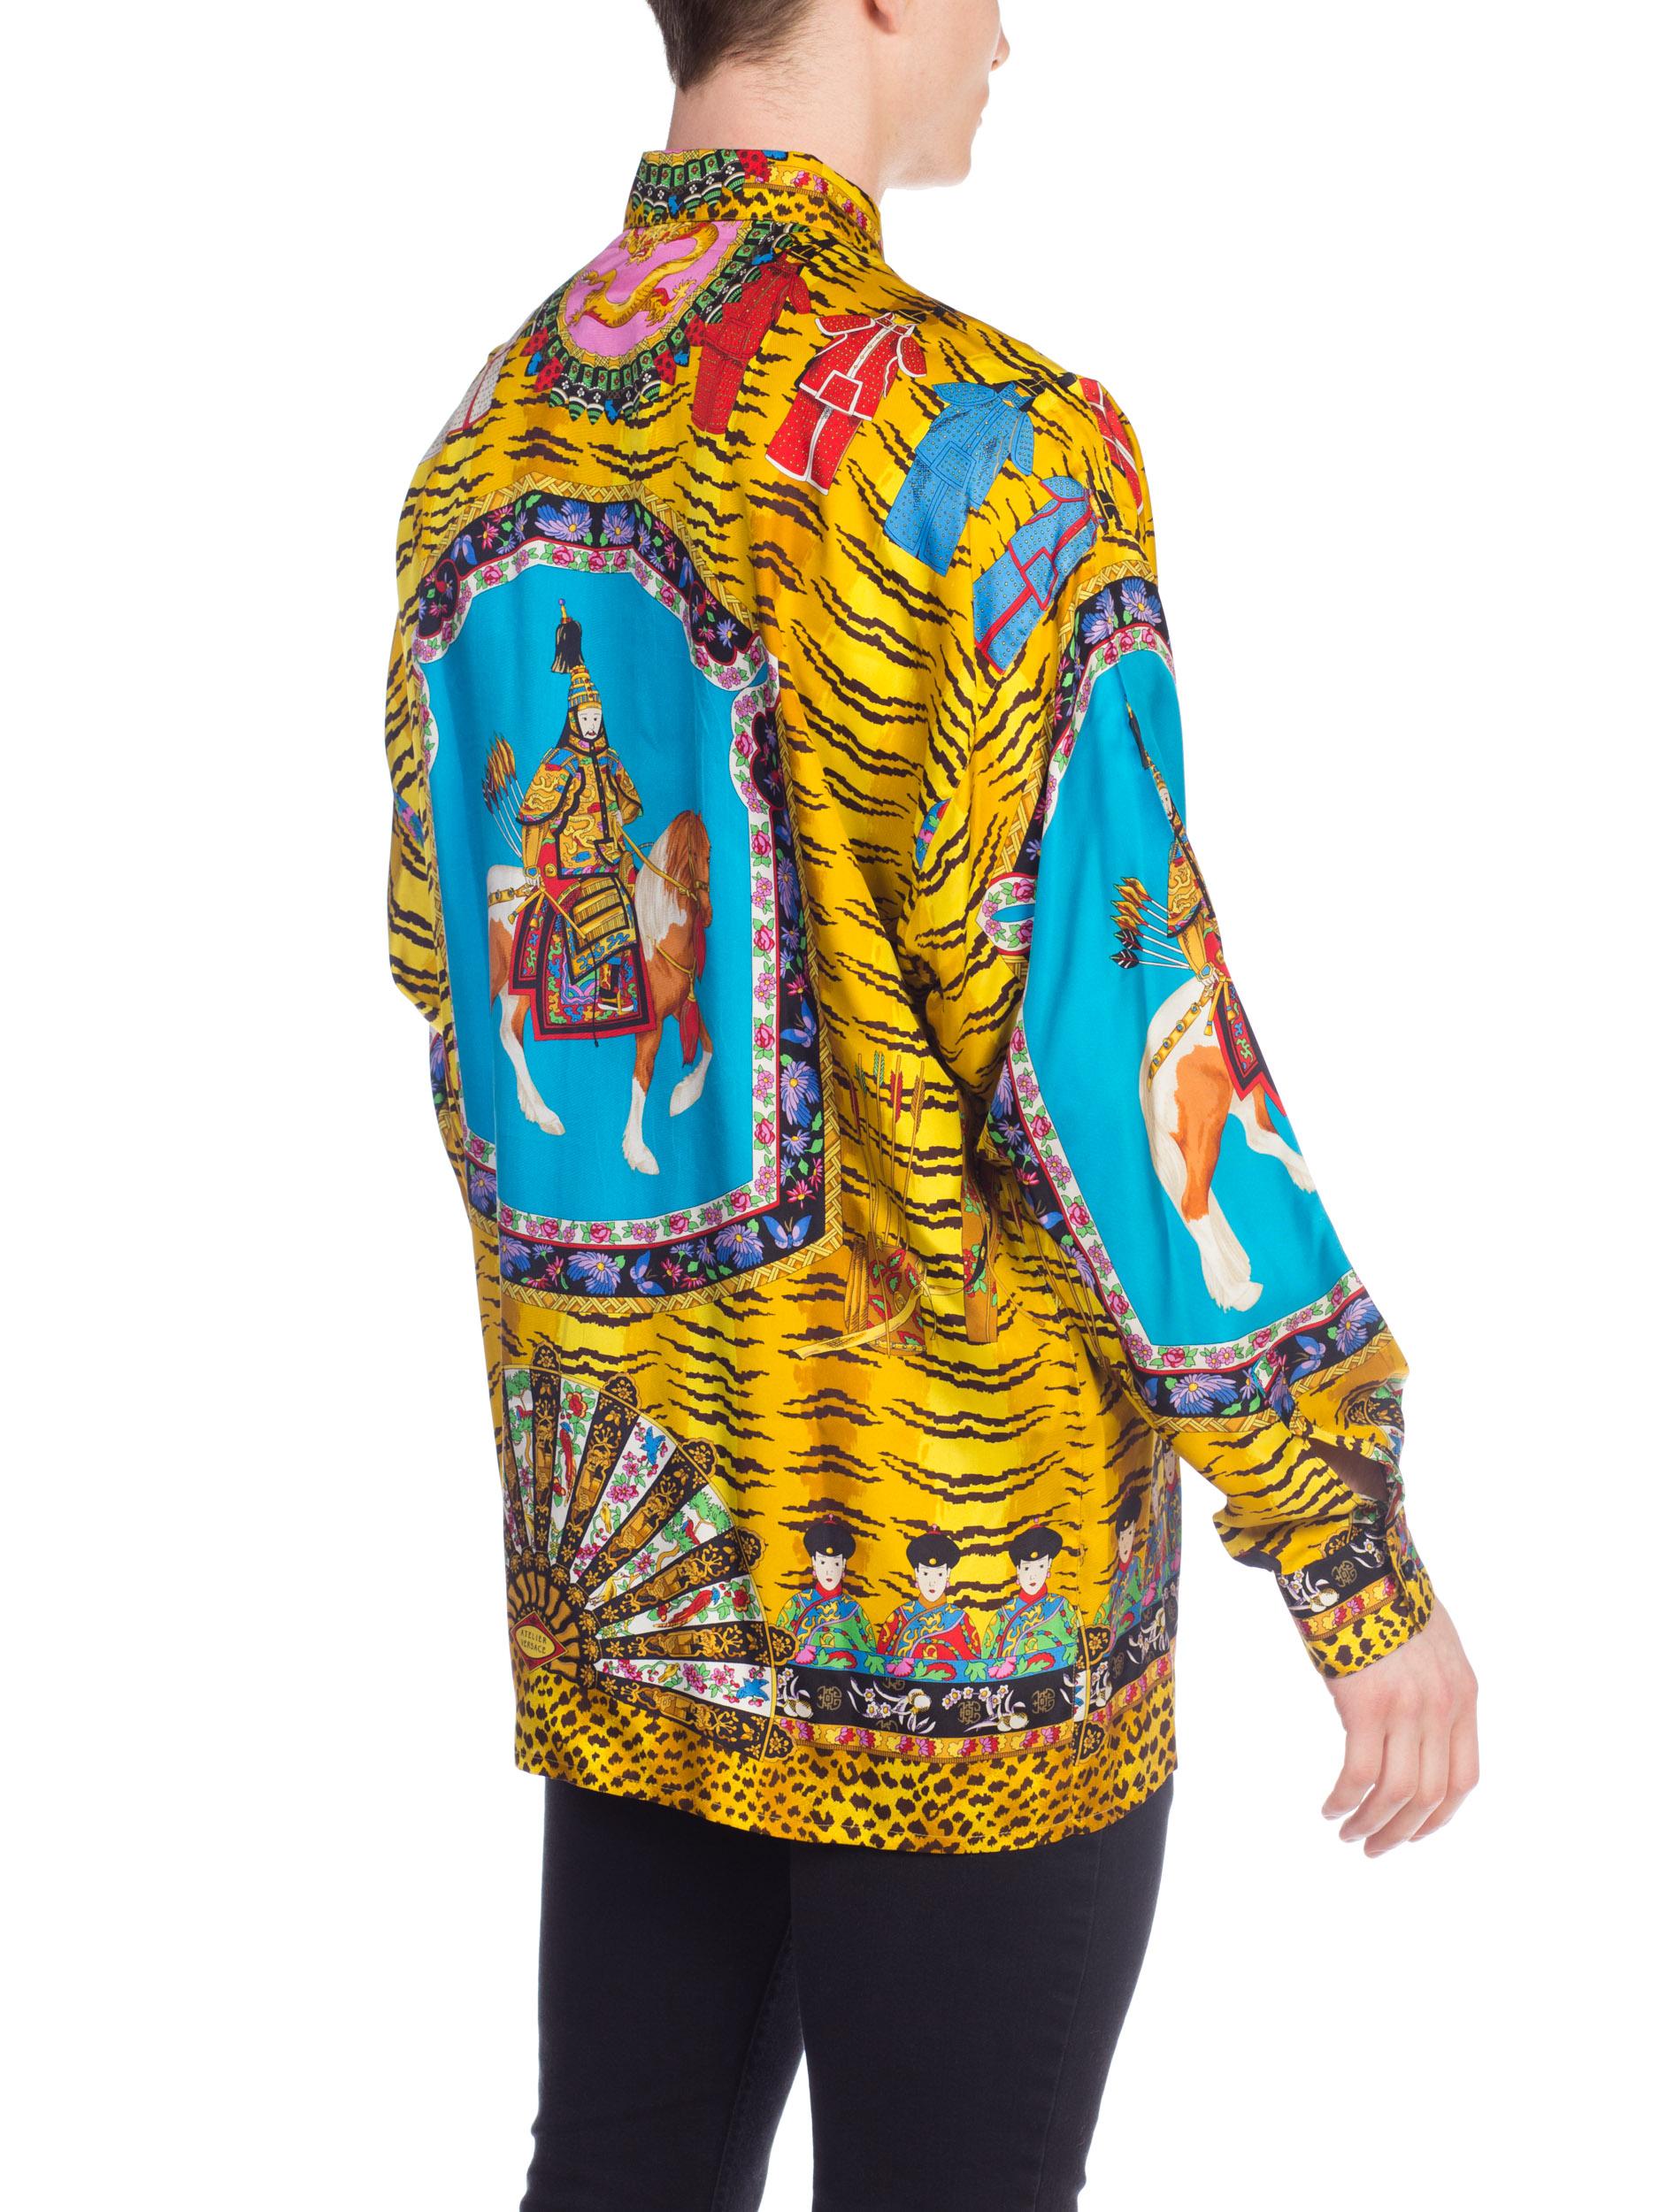 Women's or Men's Rare Chinese Emperor Gianni Versace Silk Shirt Mens